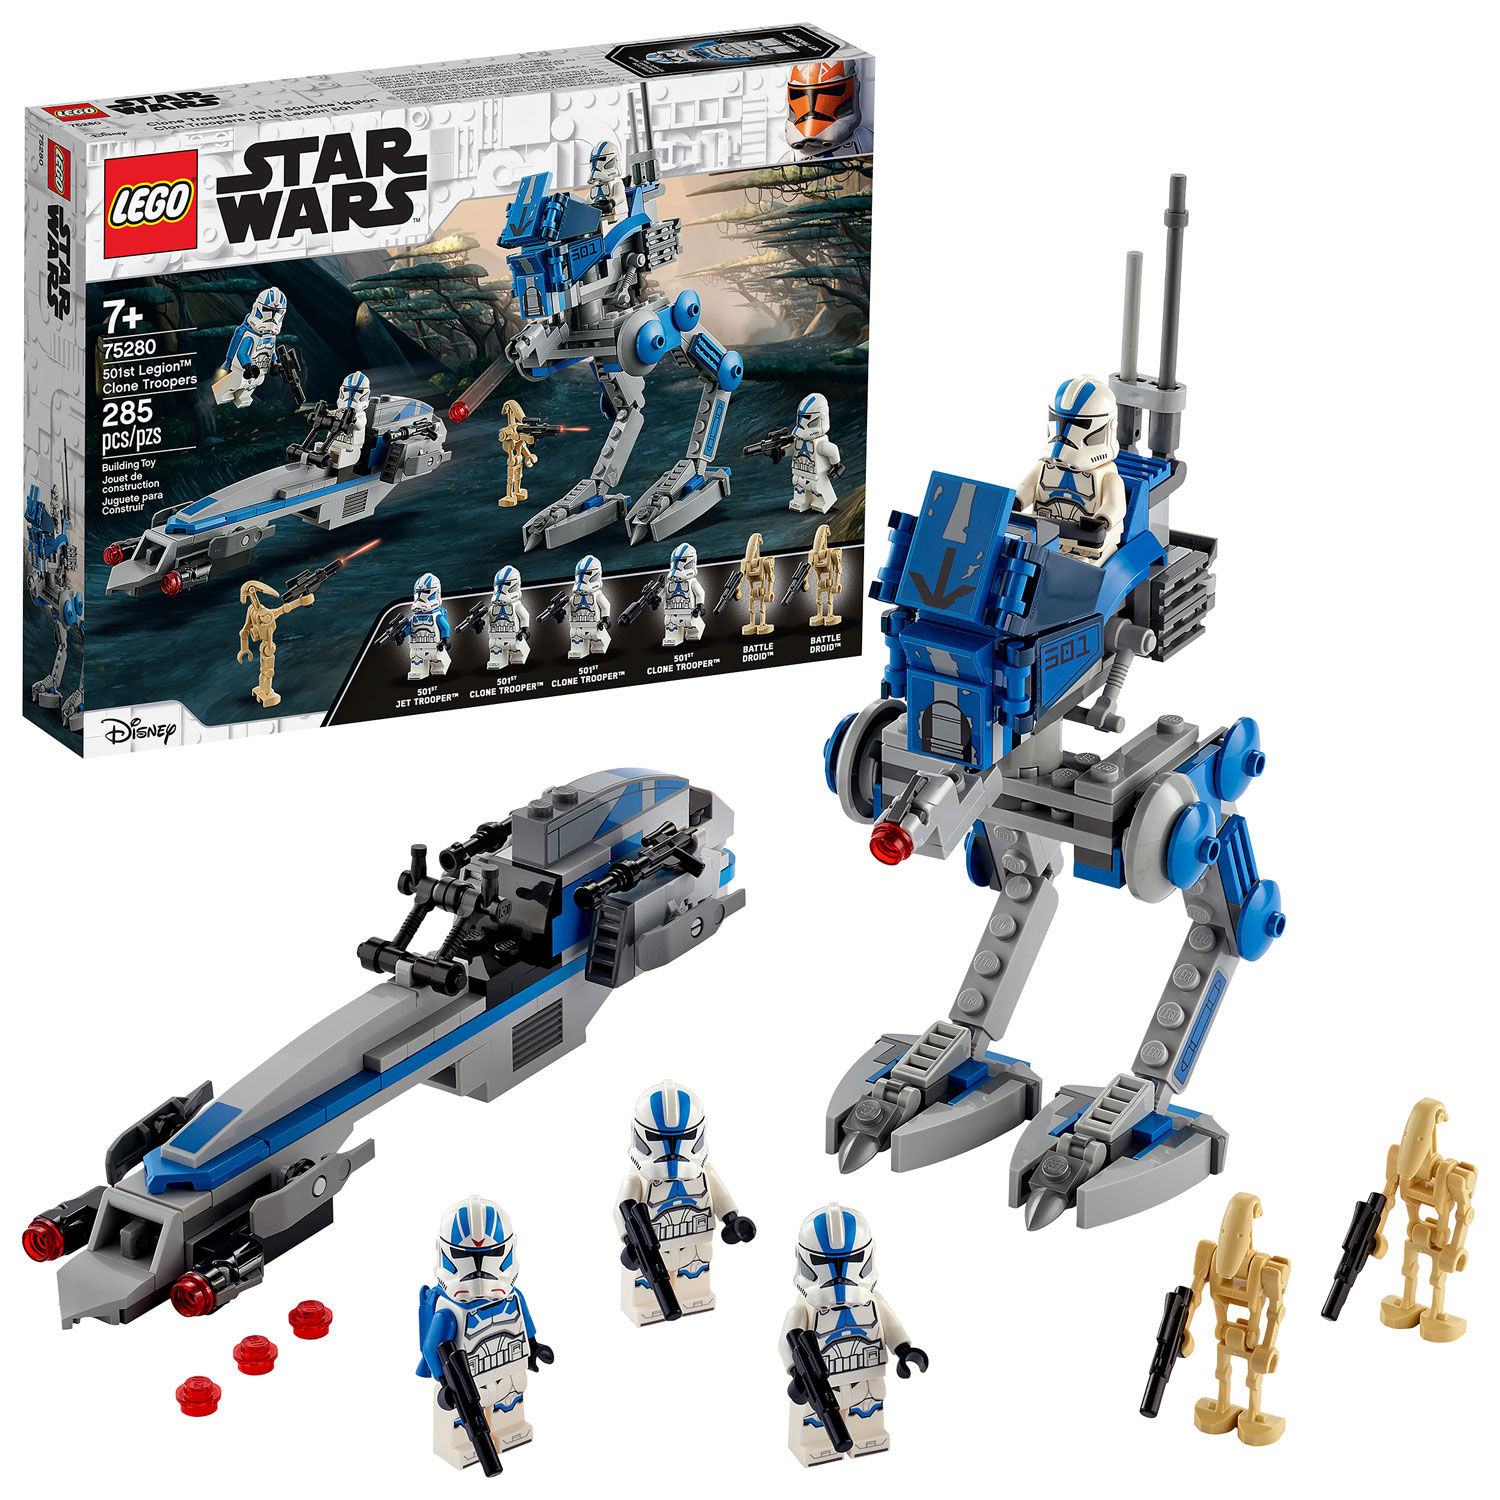 LEGO Star Wars 501st Legion Clone Troopers - 285 Pieces (75280)